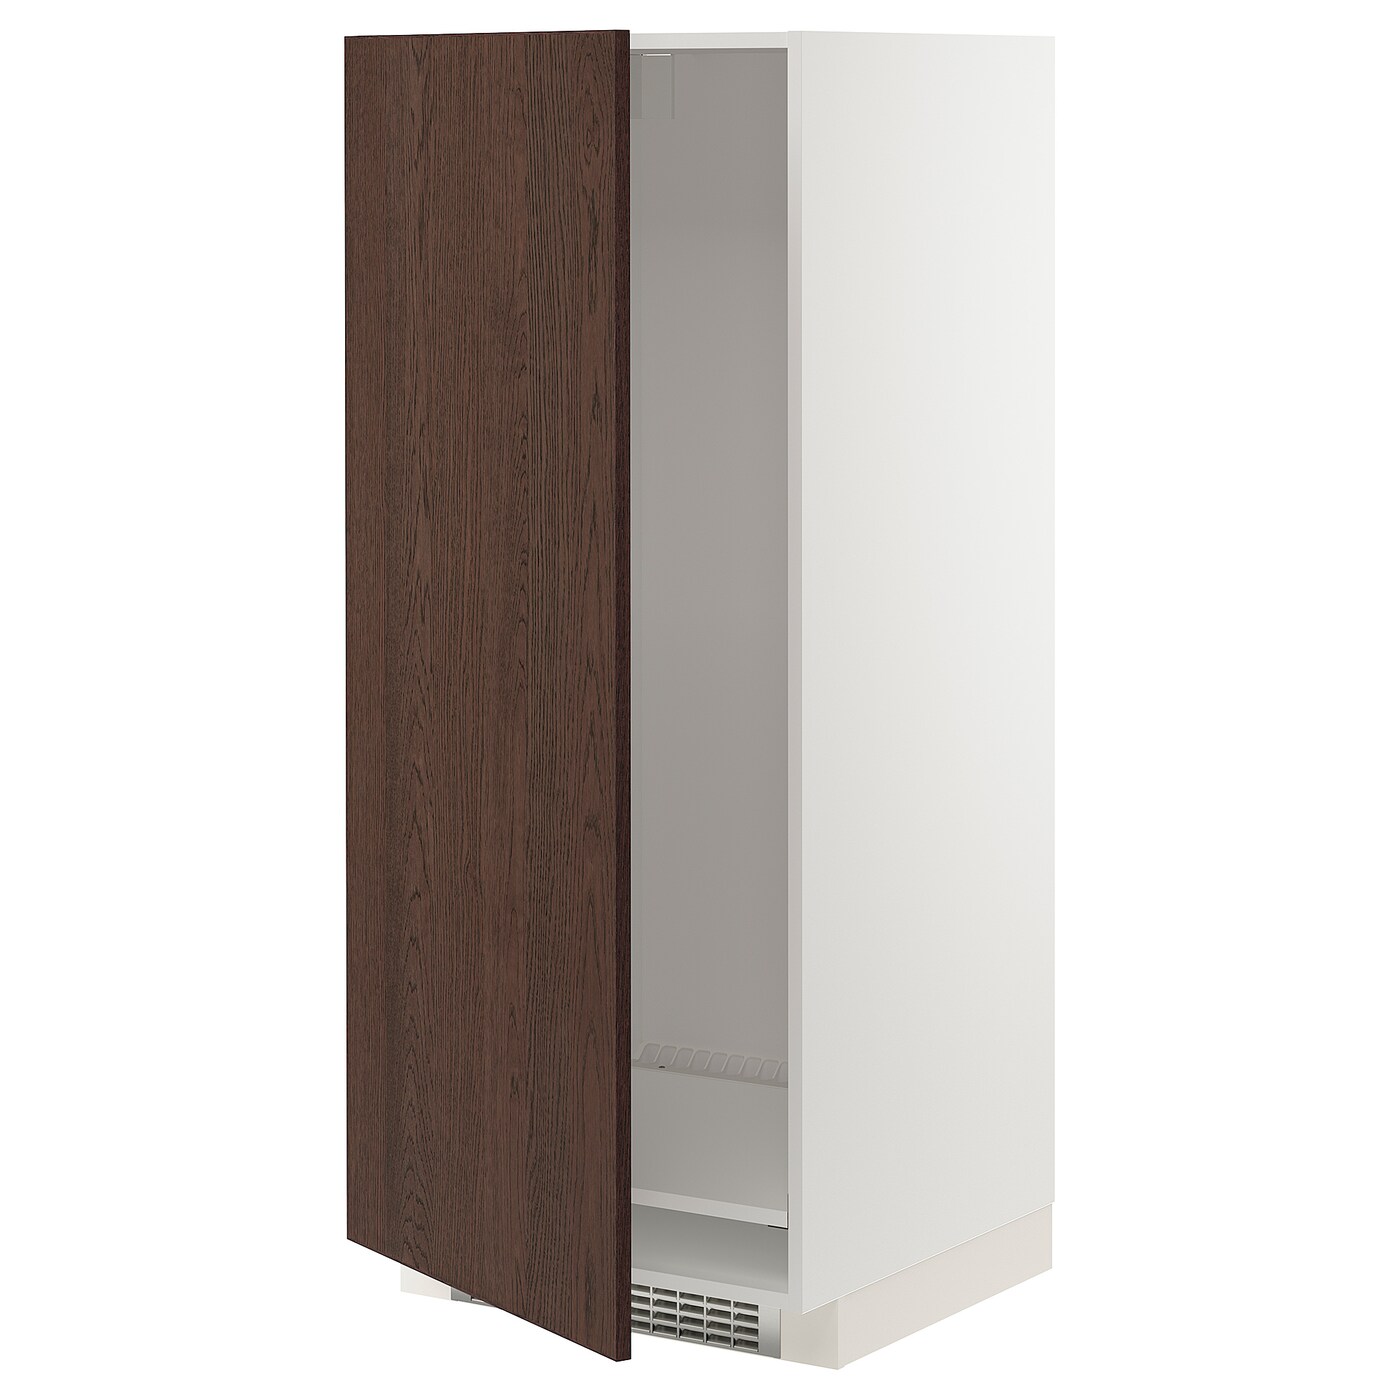 Высокий кухонный шкаф - IKEA METOD/МЕТОД ИКЕА, 140х60х60 см, белый/коричневый